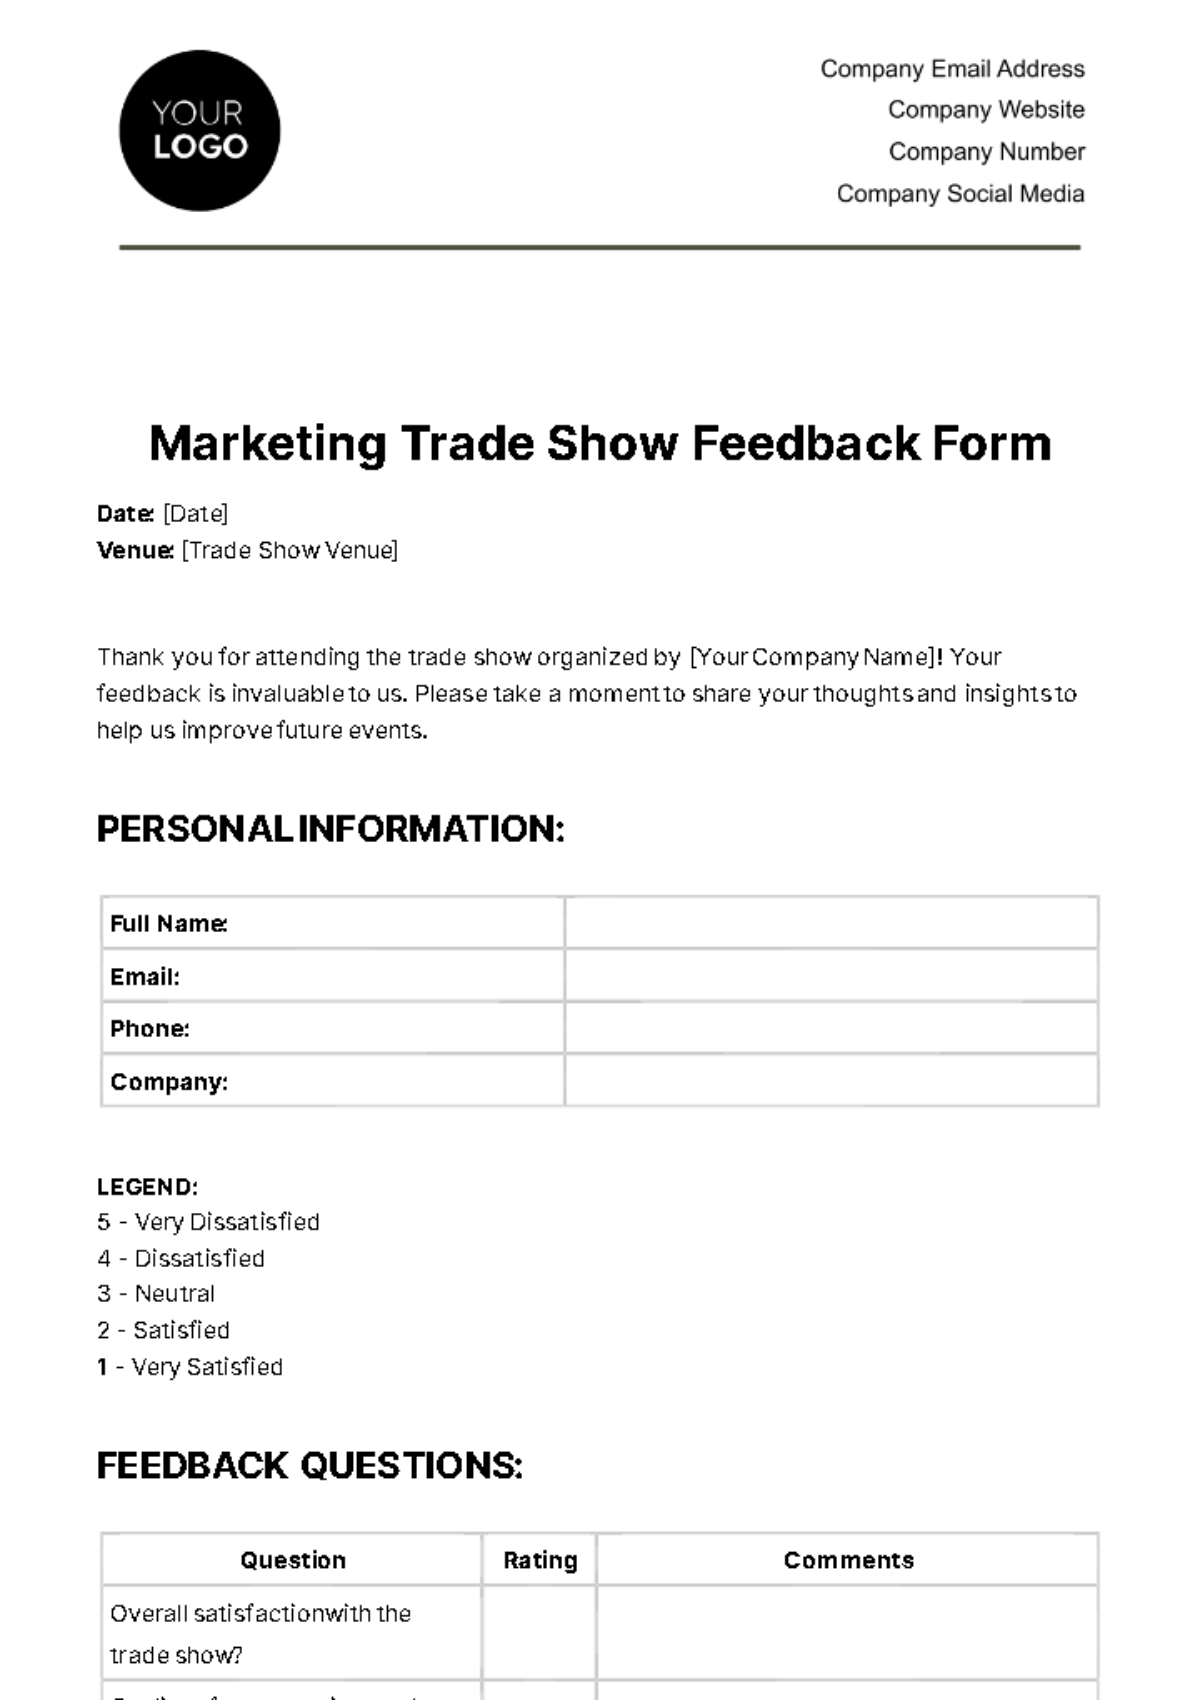 Free Marketing Trade Show Feedback Form Template